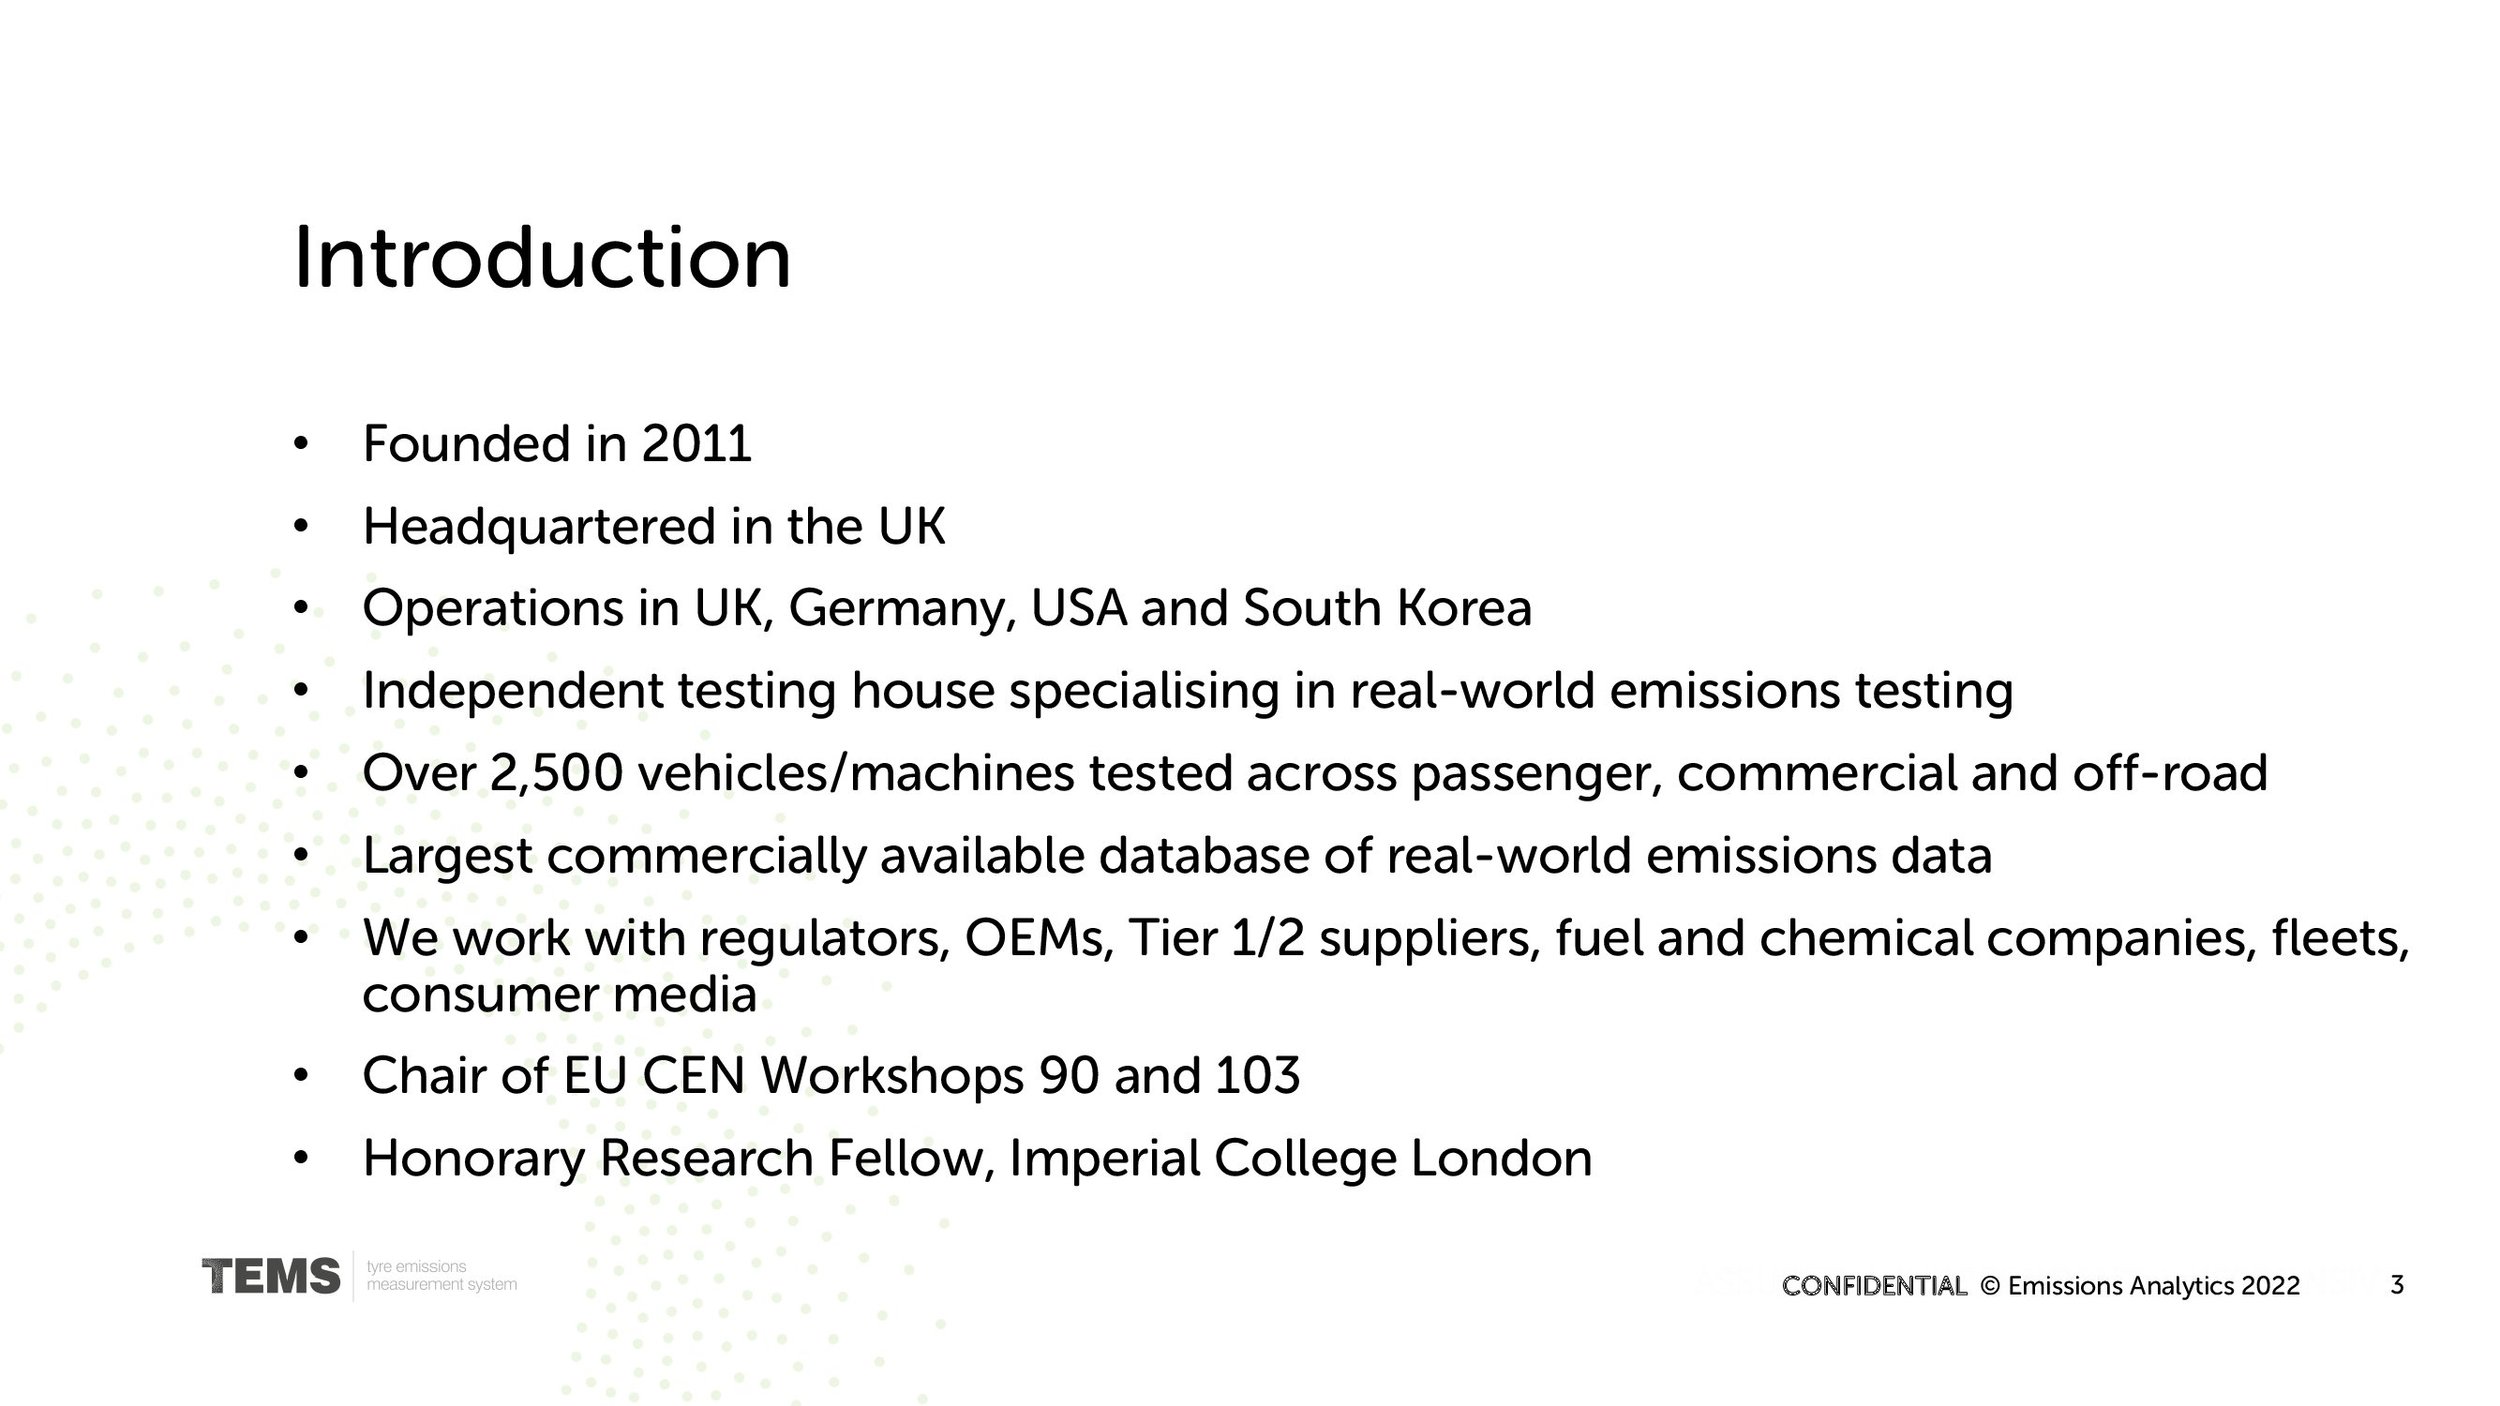 Emissions Analytics CRC tires presentation 16 March 2022_00003.jpg